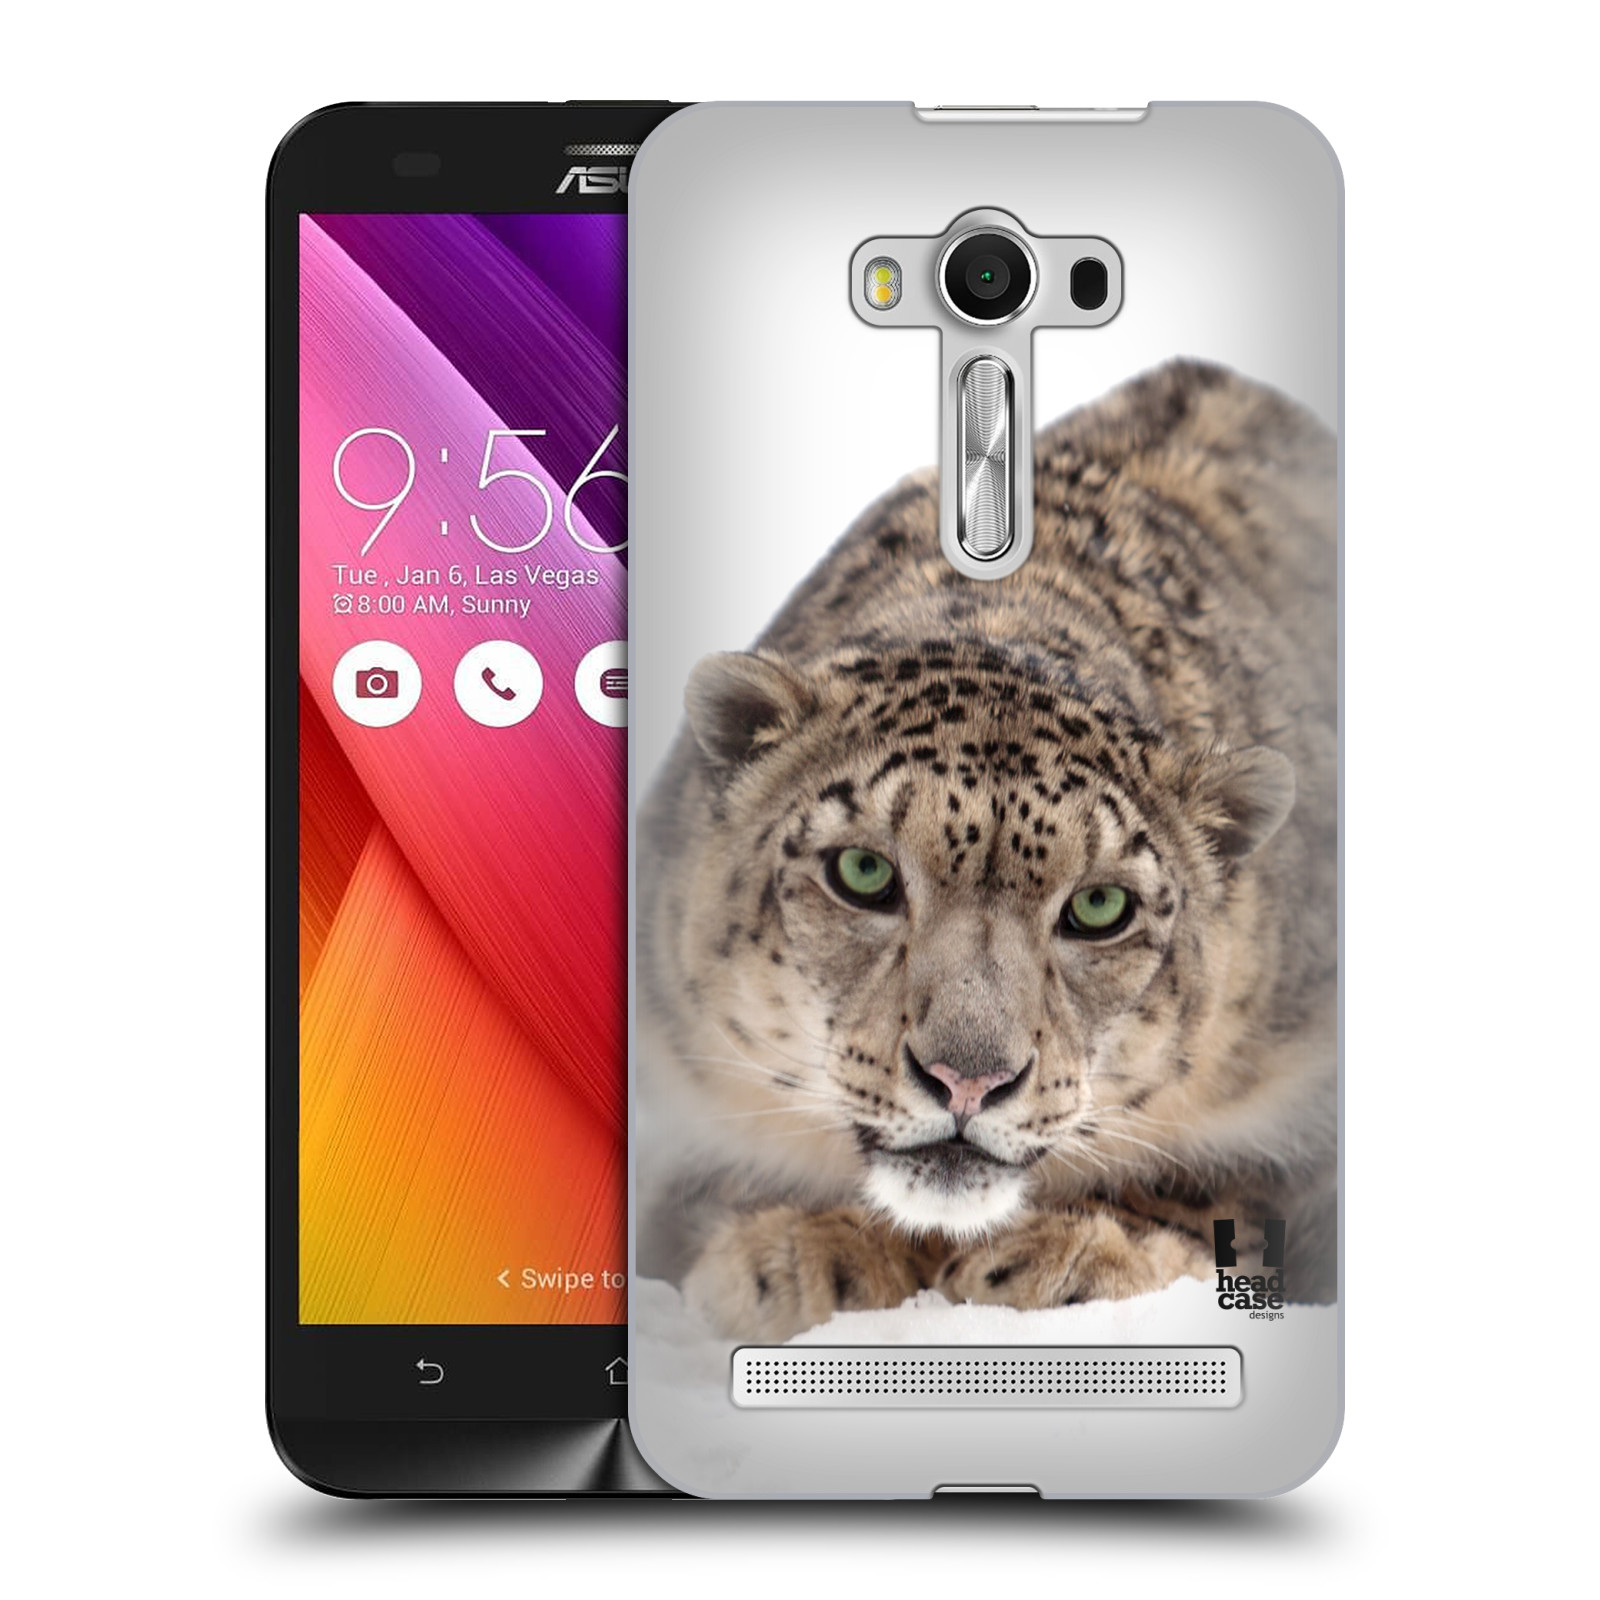 HEAD CASE plastový obal na mobil Asus Zenfone 2 LASER (5,5 displej ZE550KL) vzor Divočina, Divoký život a zvířata foto SNĚŽNÝ LEOPARD